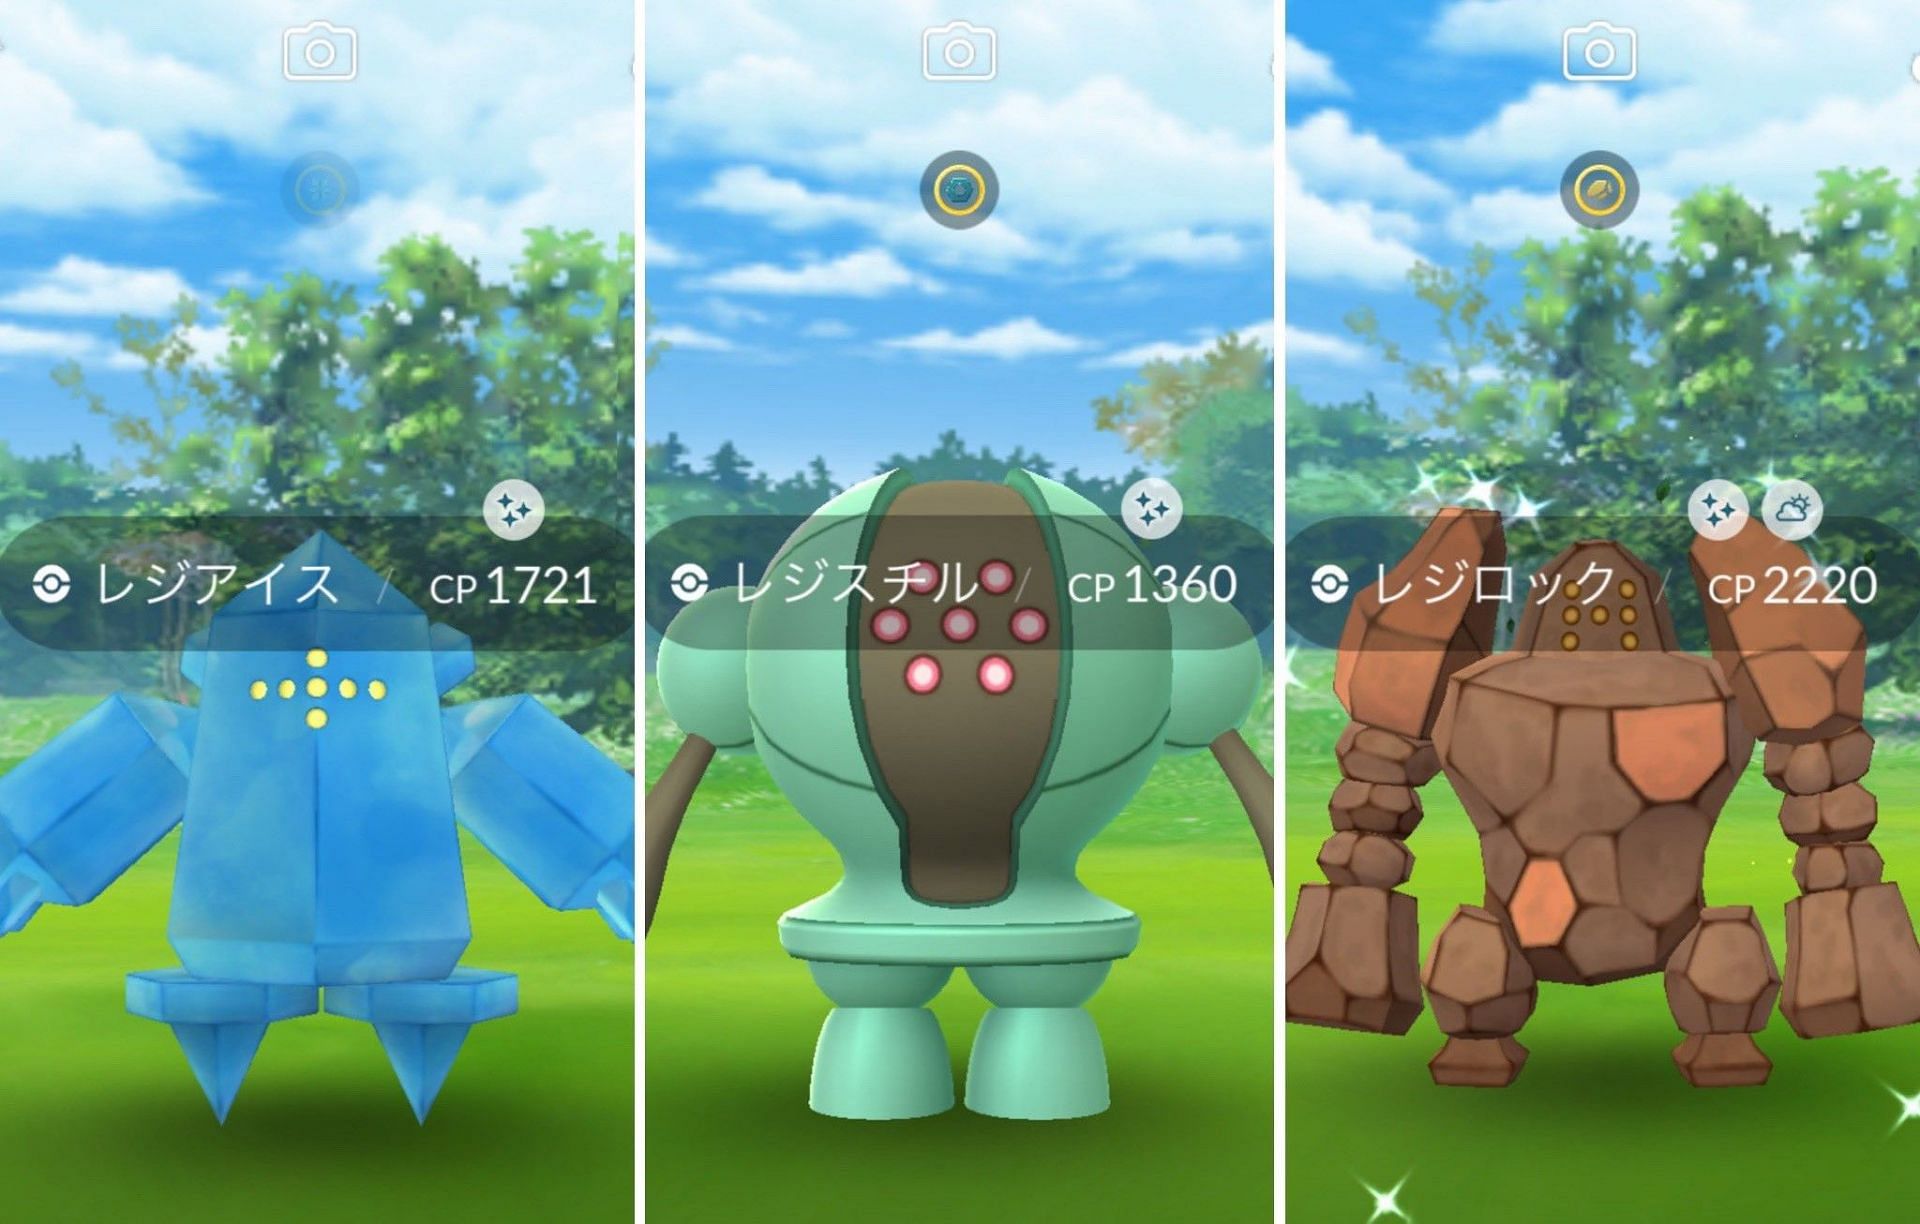 Shiny Regirock (right) is currently available in Pokemon GO alongside shiny Registeel and shiny Regice (Image via Niantic)